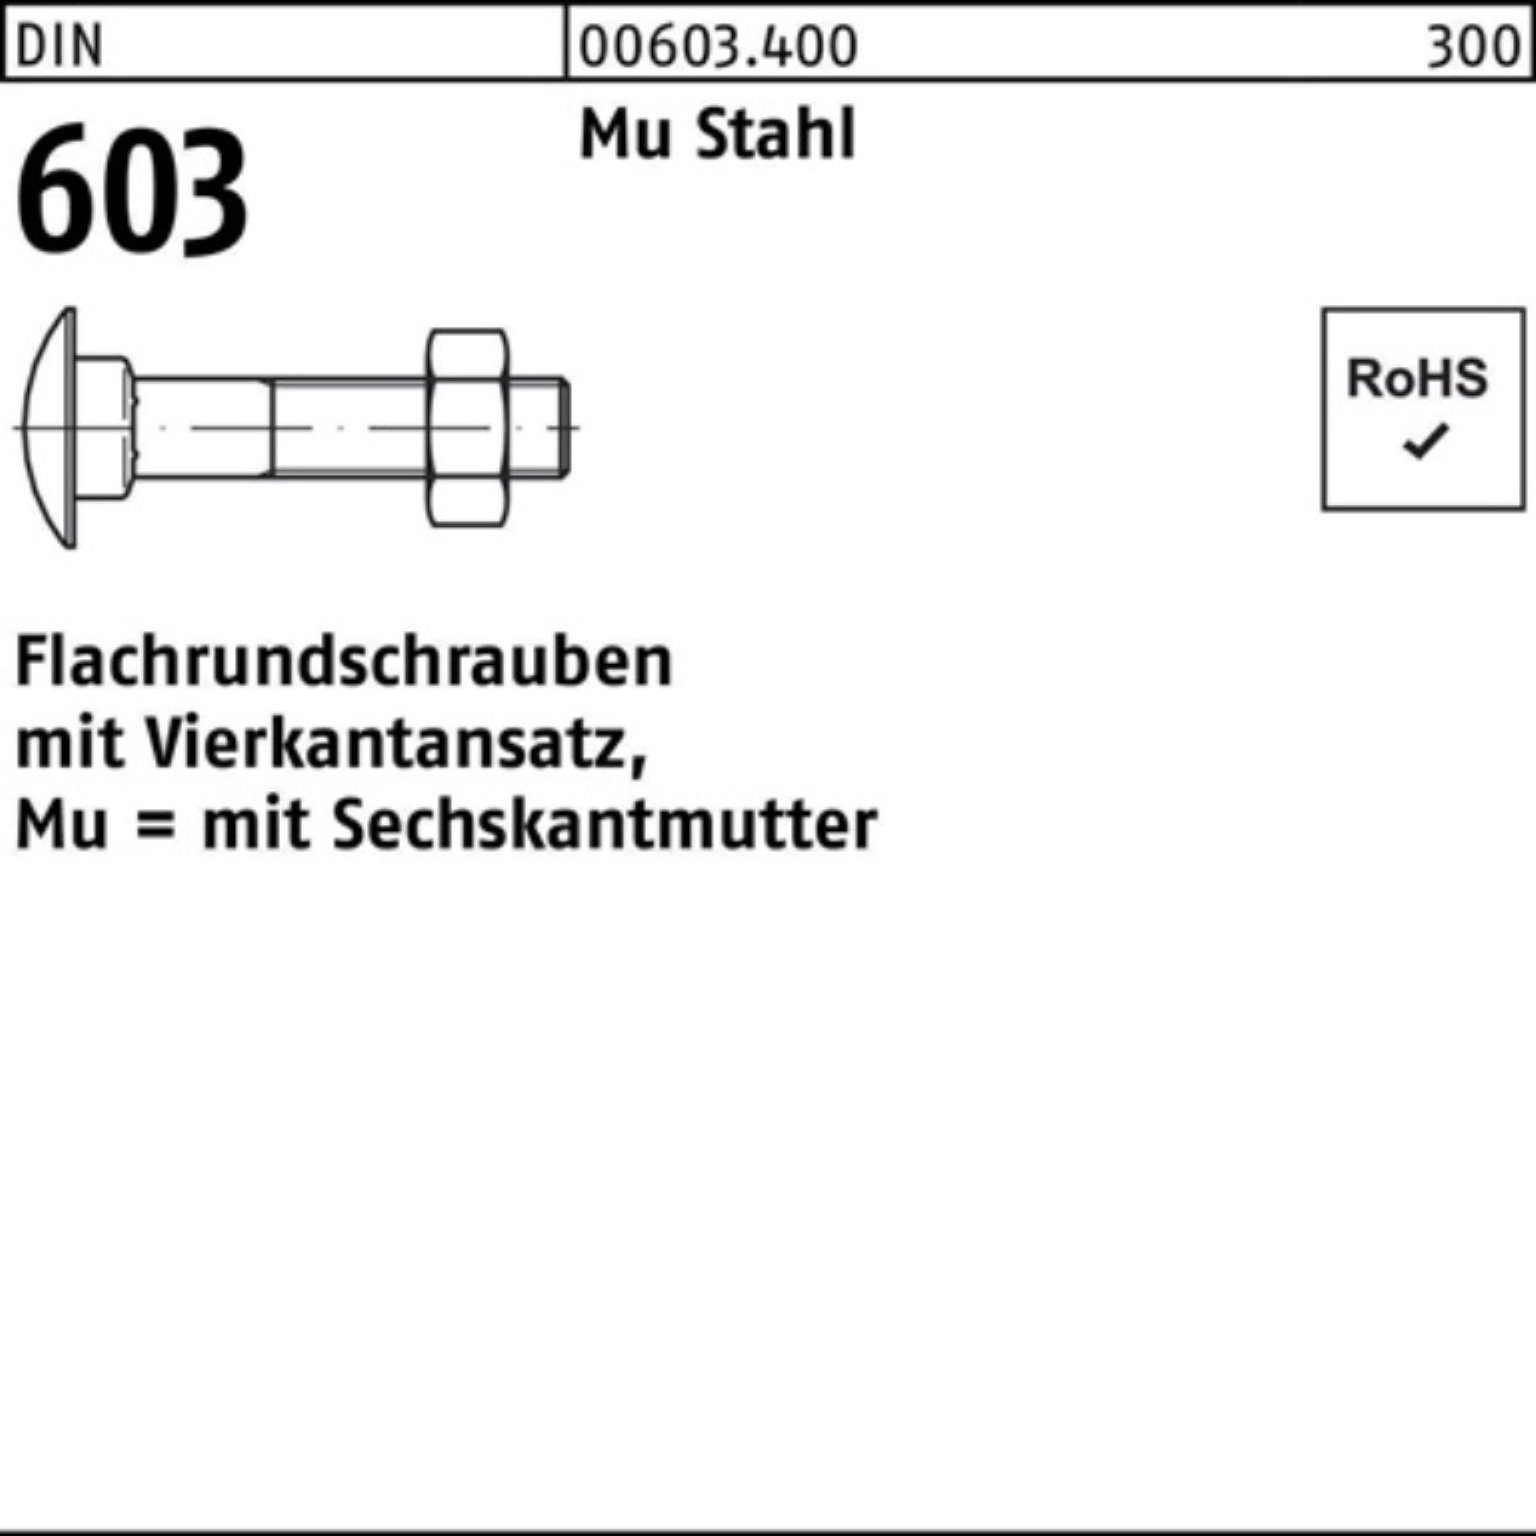 Flachrundschraube Vierkantansatz/6-ktmutter Schraube 200er DIN M5x50 603 Pack Reyher M